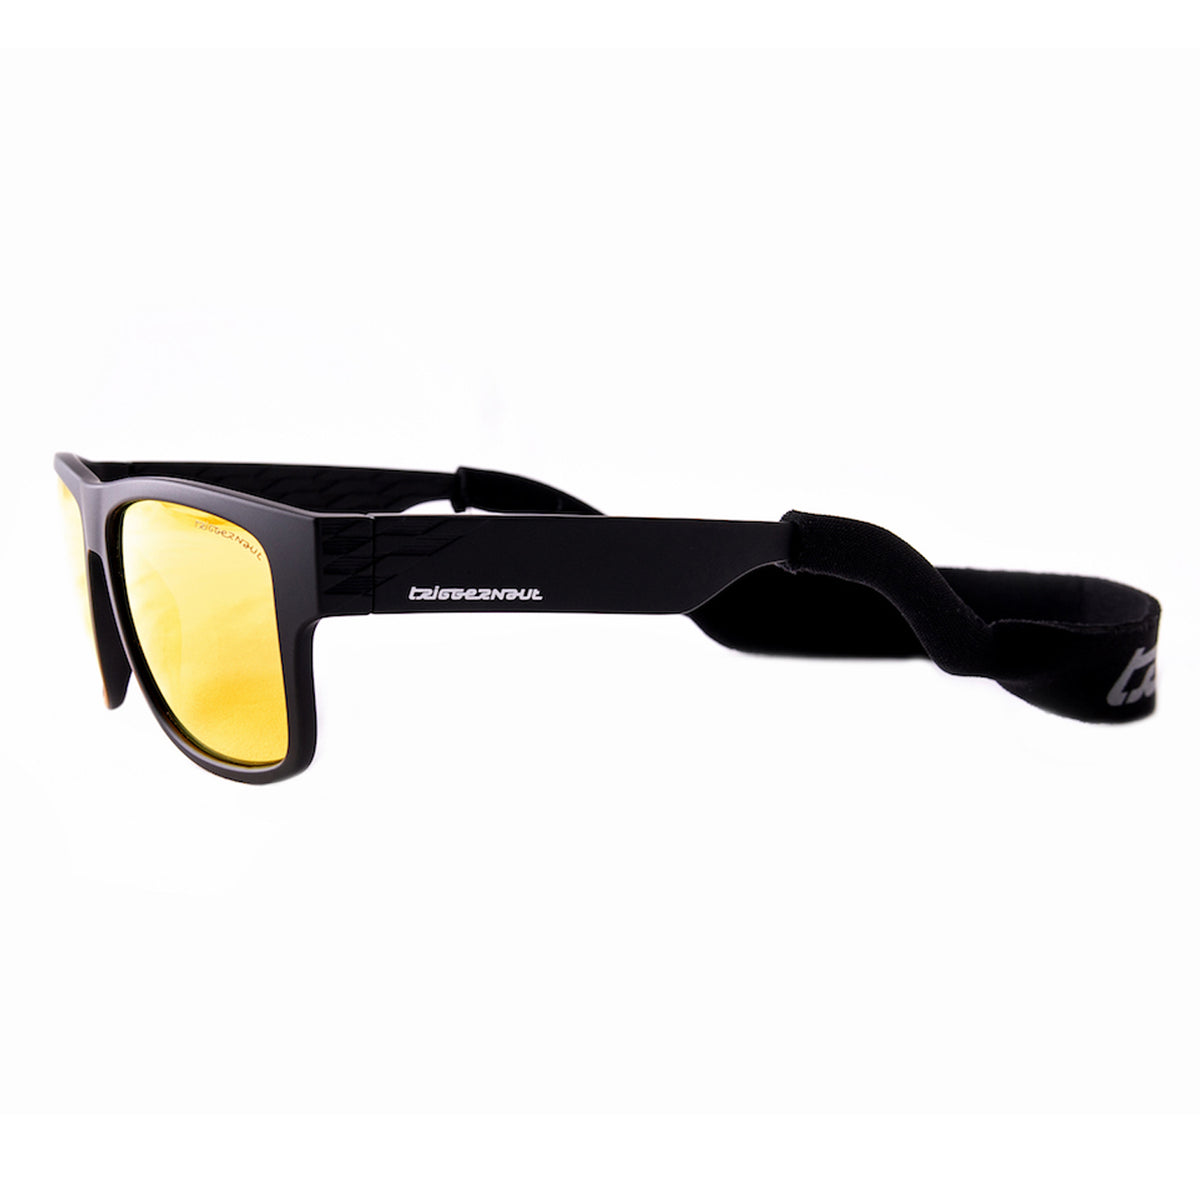 Sunglasses Head Strap – Kosin Limited